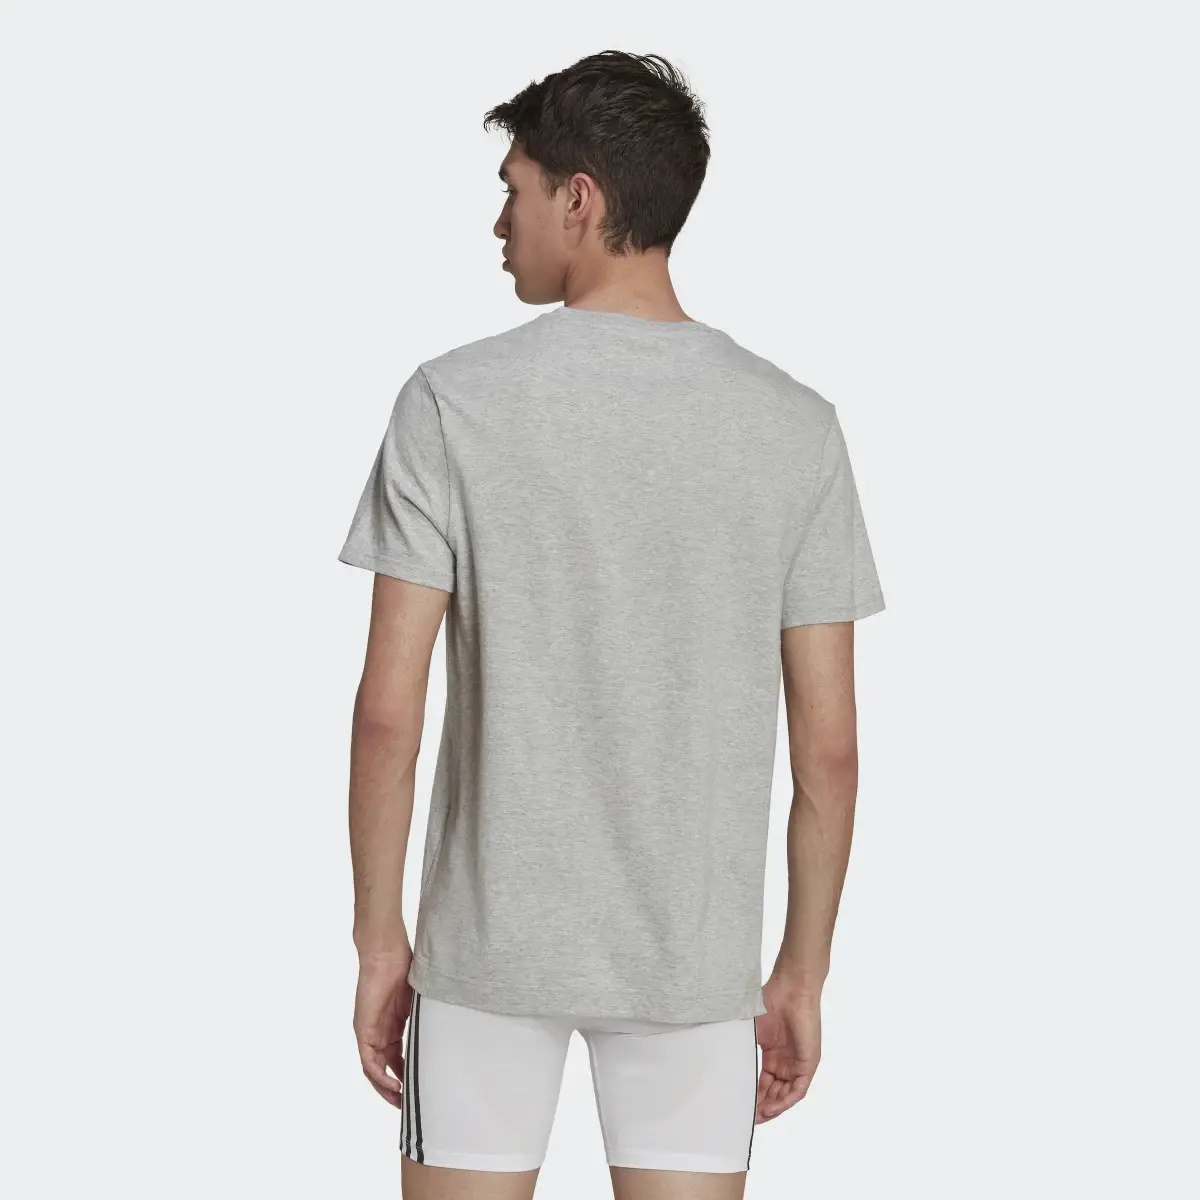 Adidas Comfort Core Cotton Tişört. 3